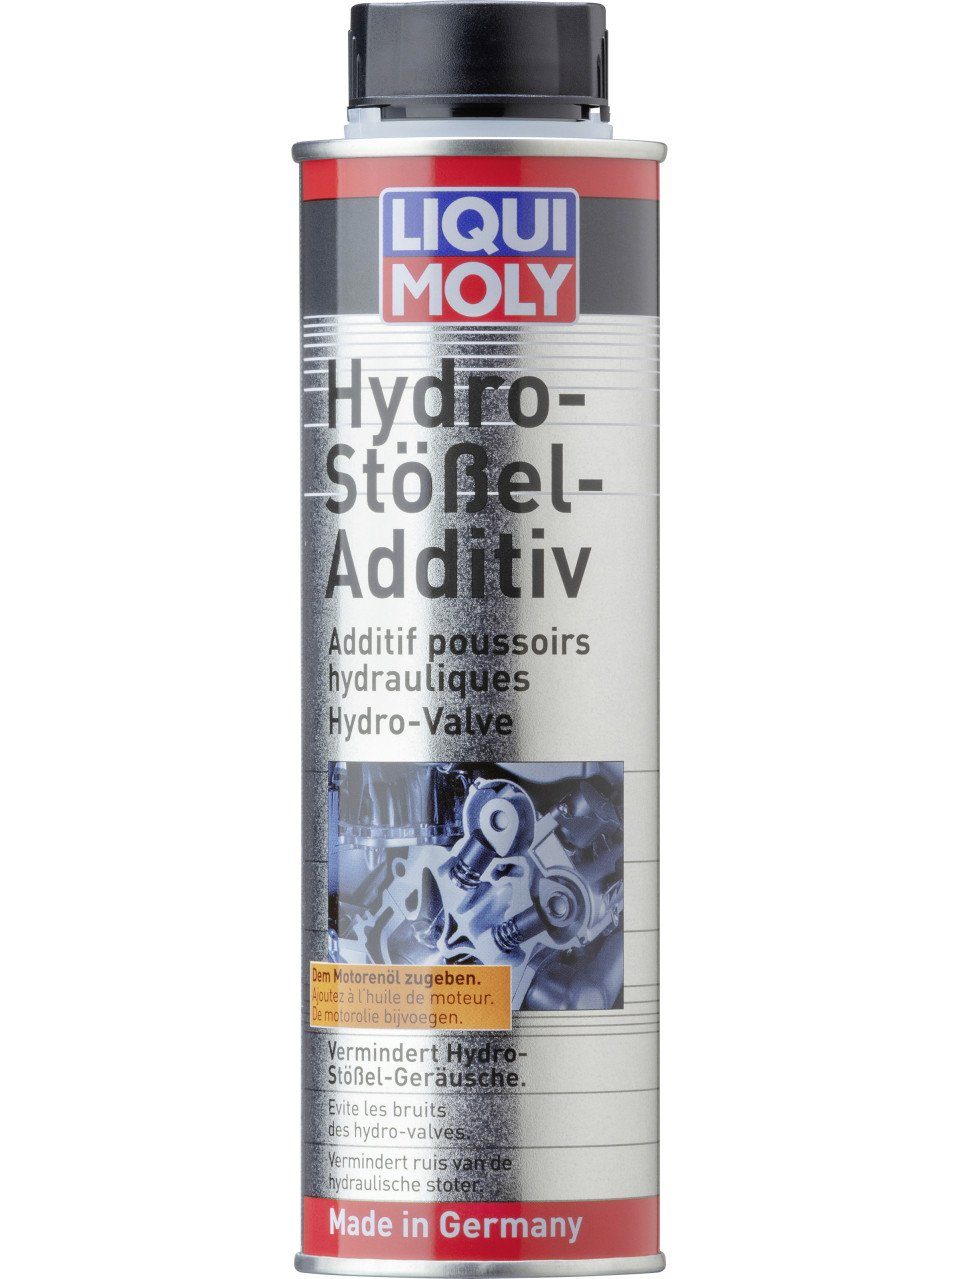 300 Diesel-Additiv ml Liqui Hydro-Stößel-Additiv Liqui Moly Moly